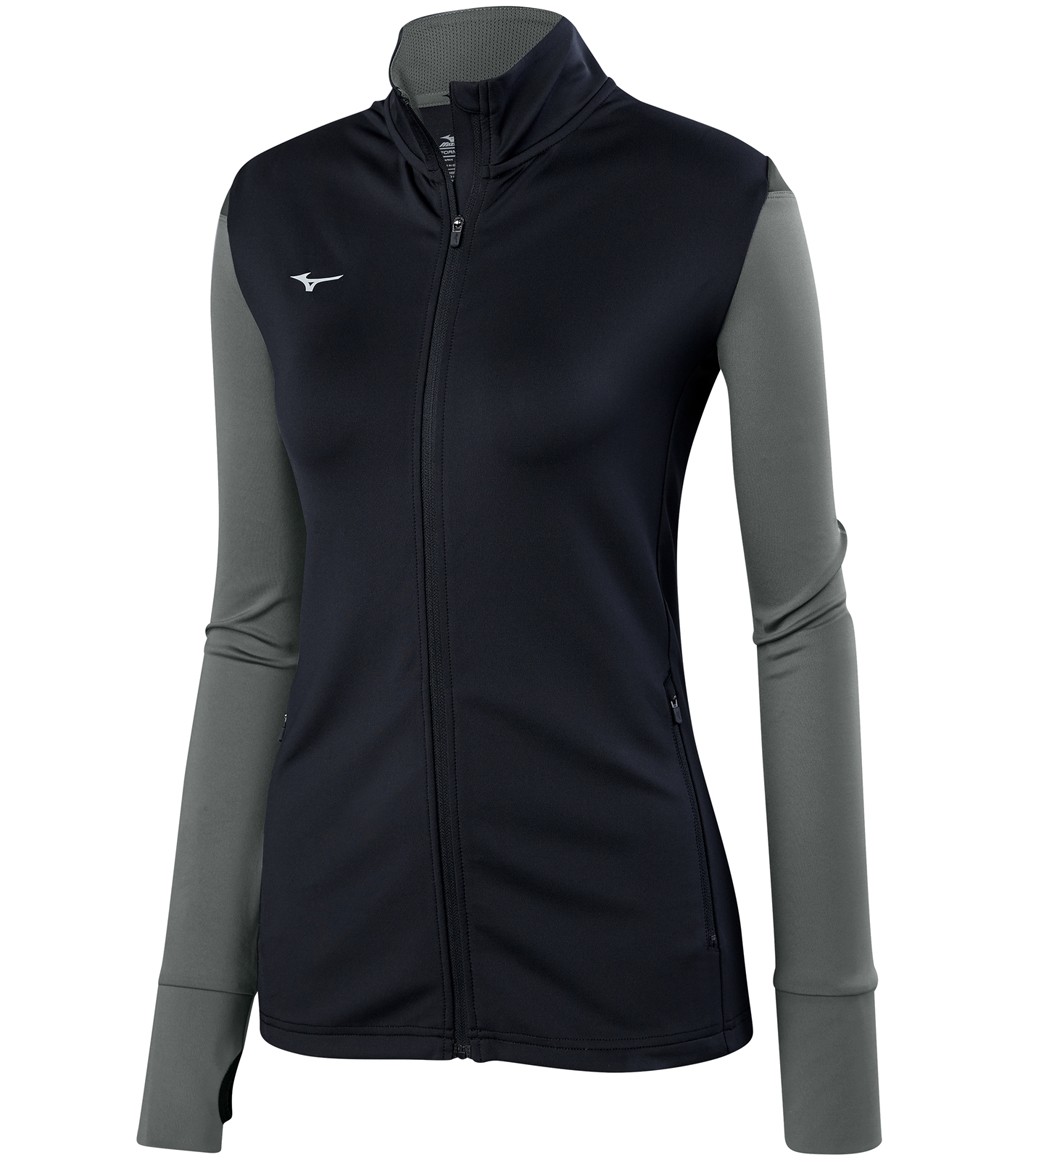 Mizuno Women's Horizon Full Zip Volleyball Jacket - Black/Grey/Charcoal Medium - Swimoutlet.com